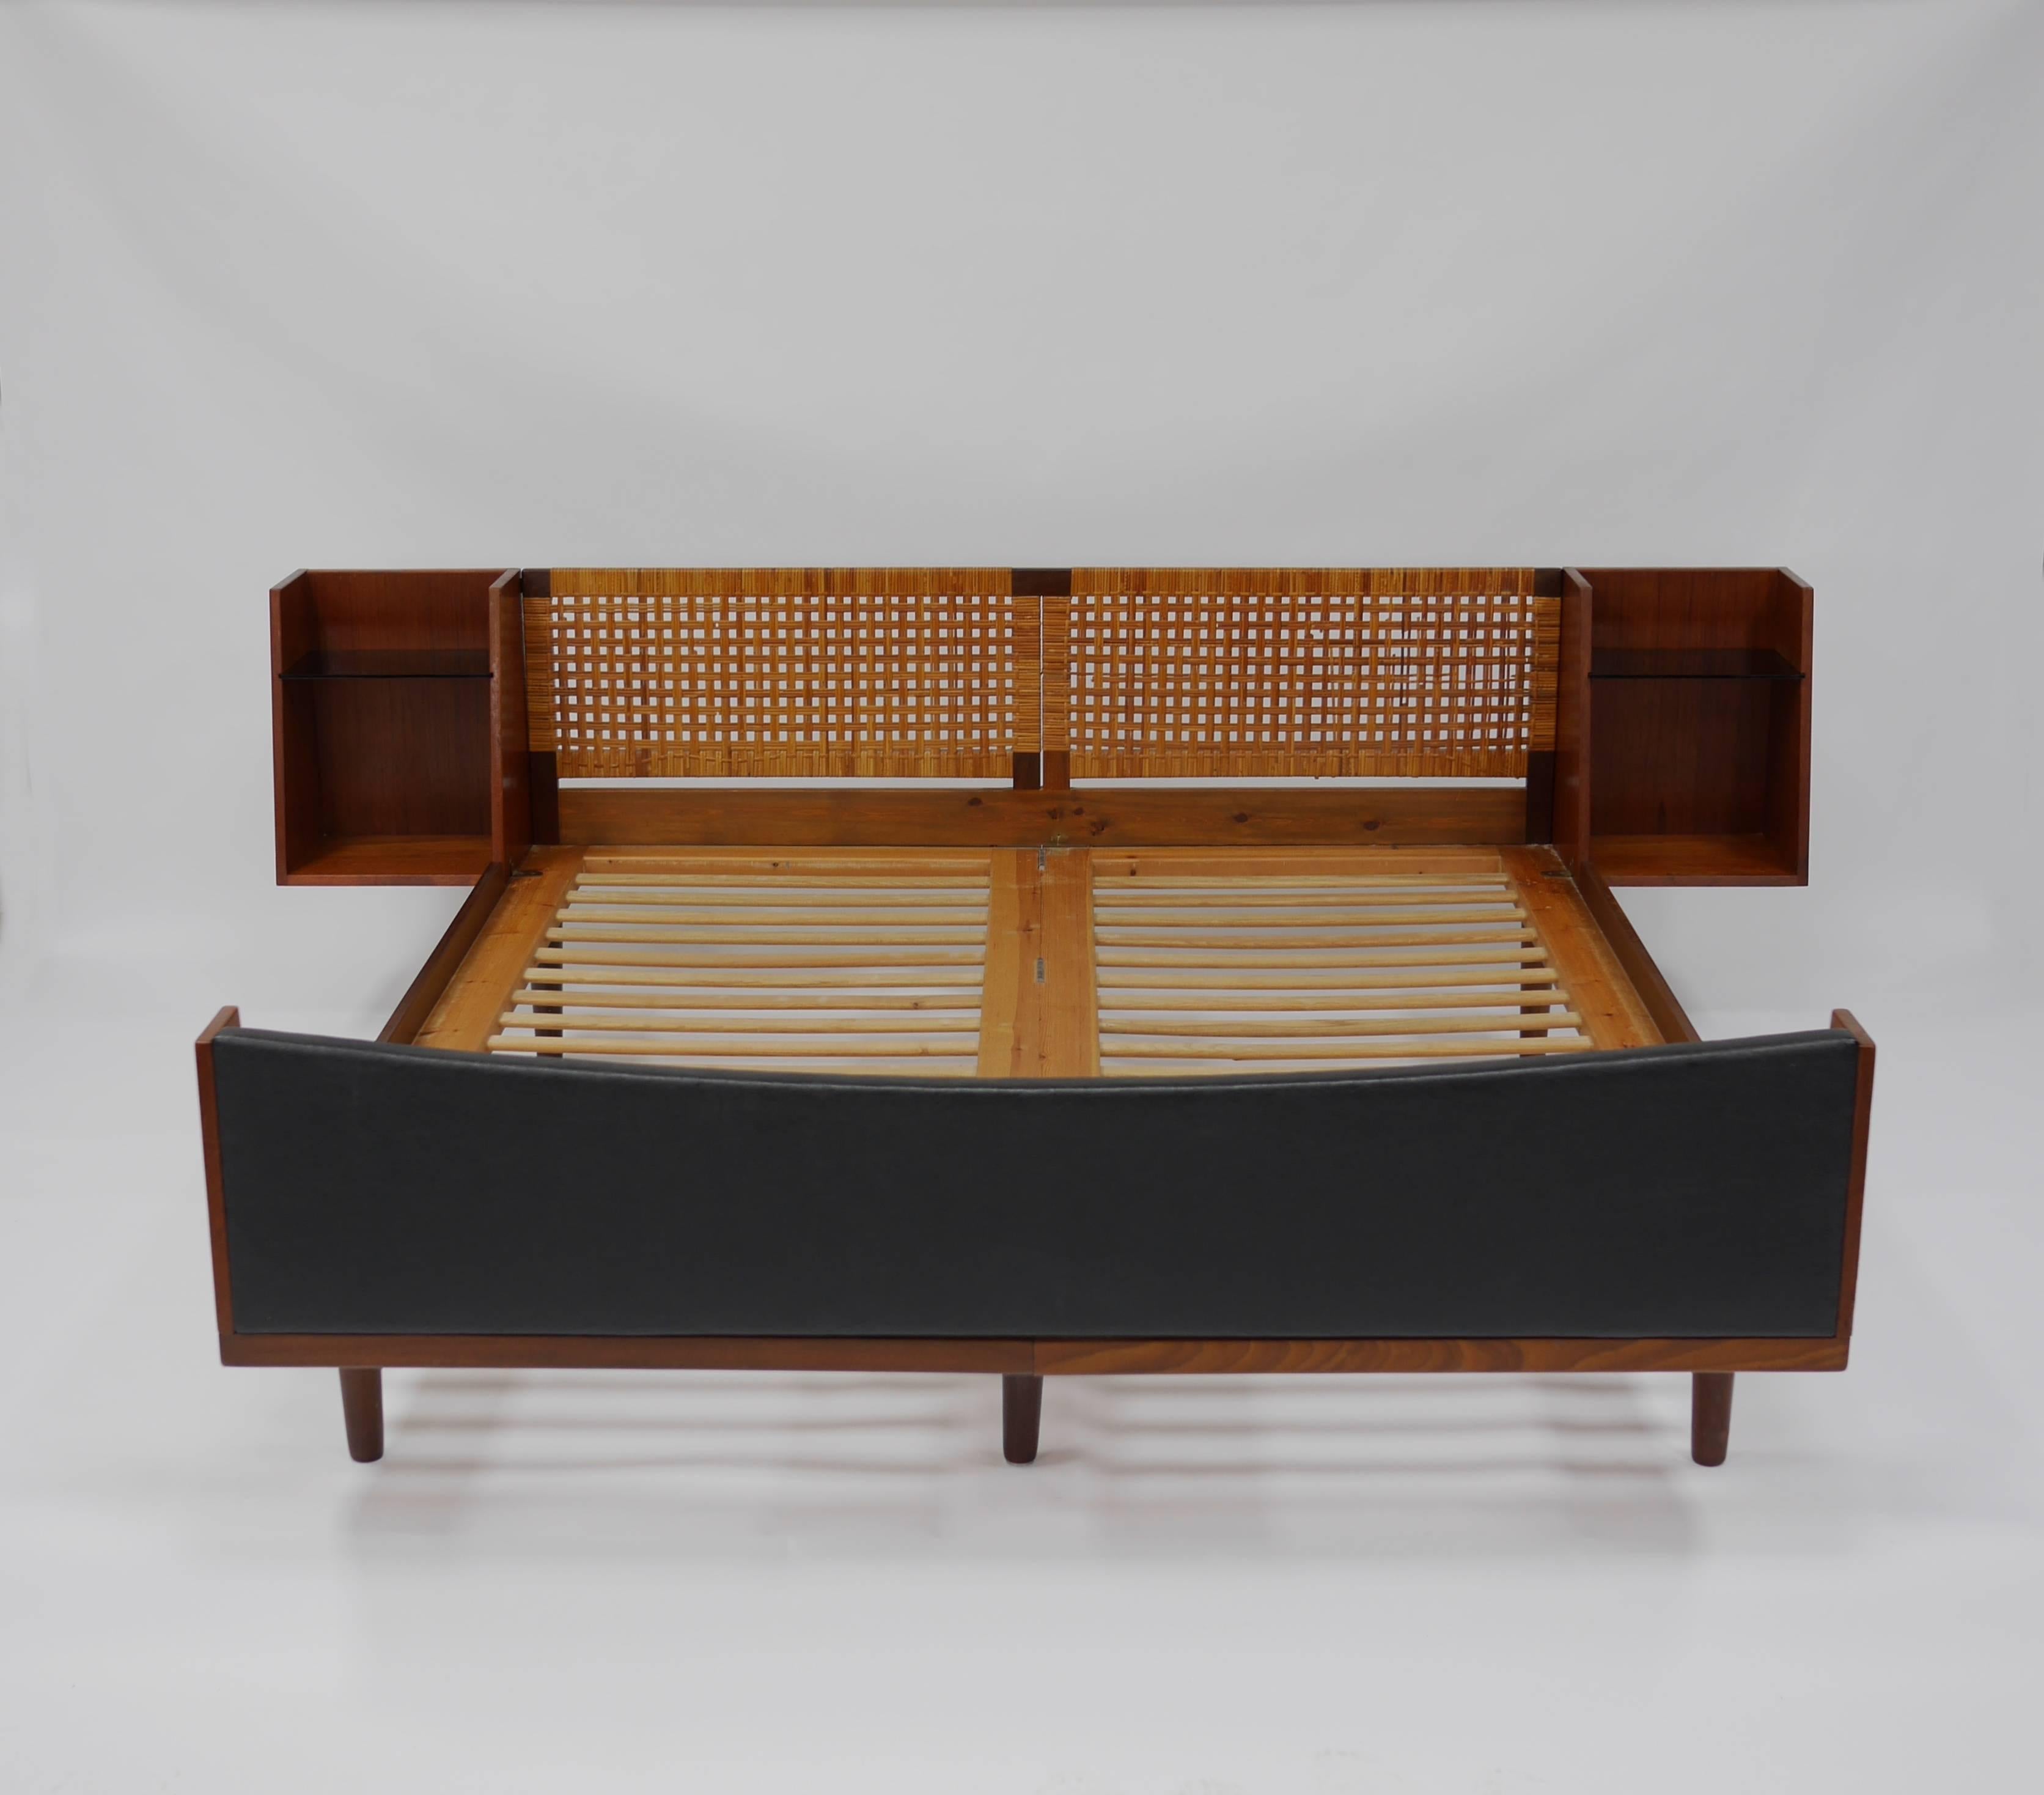 Queen-size bed model 701 by Hans J. Wegner for GETAMA. Having a teak timber frame, pine slates, attached nightstands with Vitrolite shelves, caned headboard and a vinyl footboard. Branded mark, Hans Wegner, GETAMA.

Measures: 95